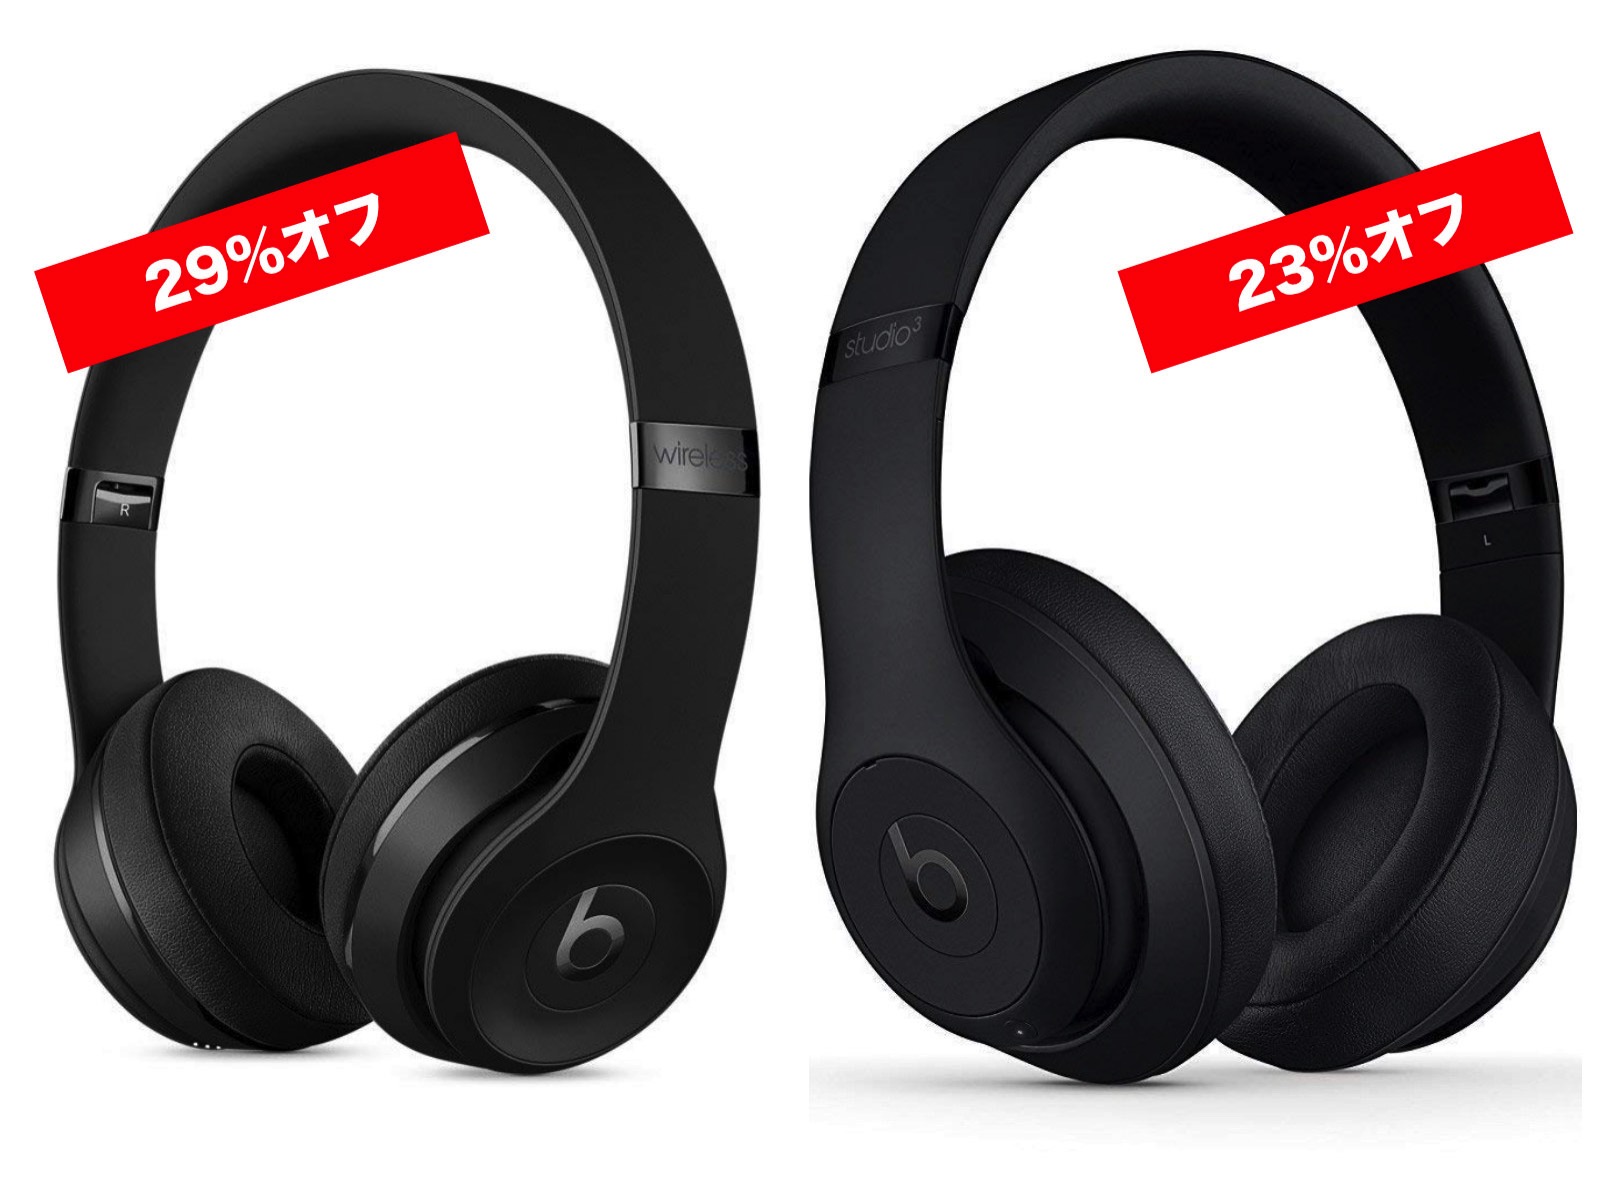 Bose-Headphones-on-sale.jpg